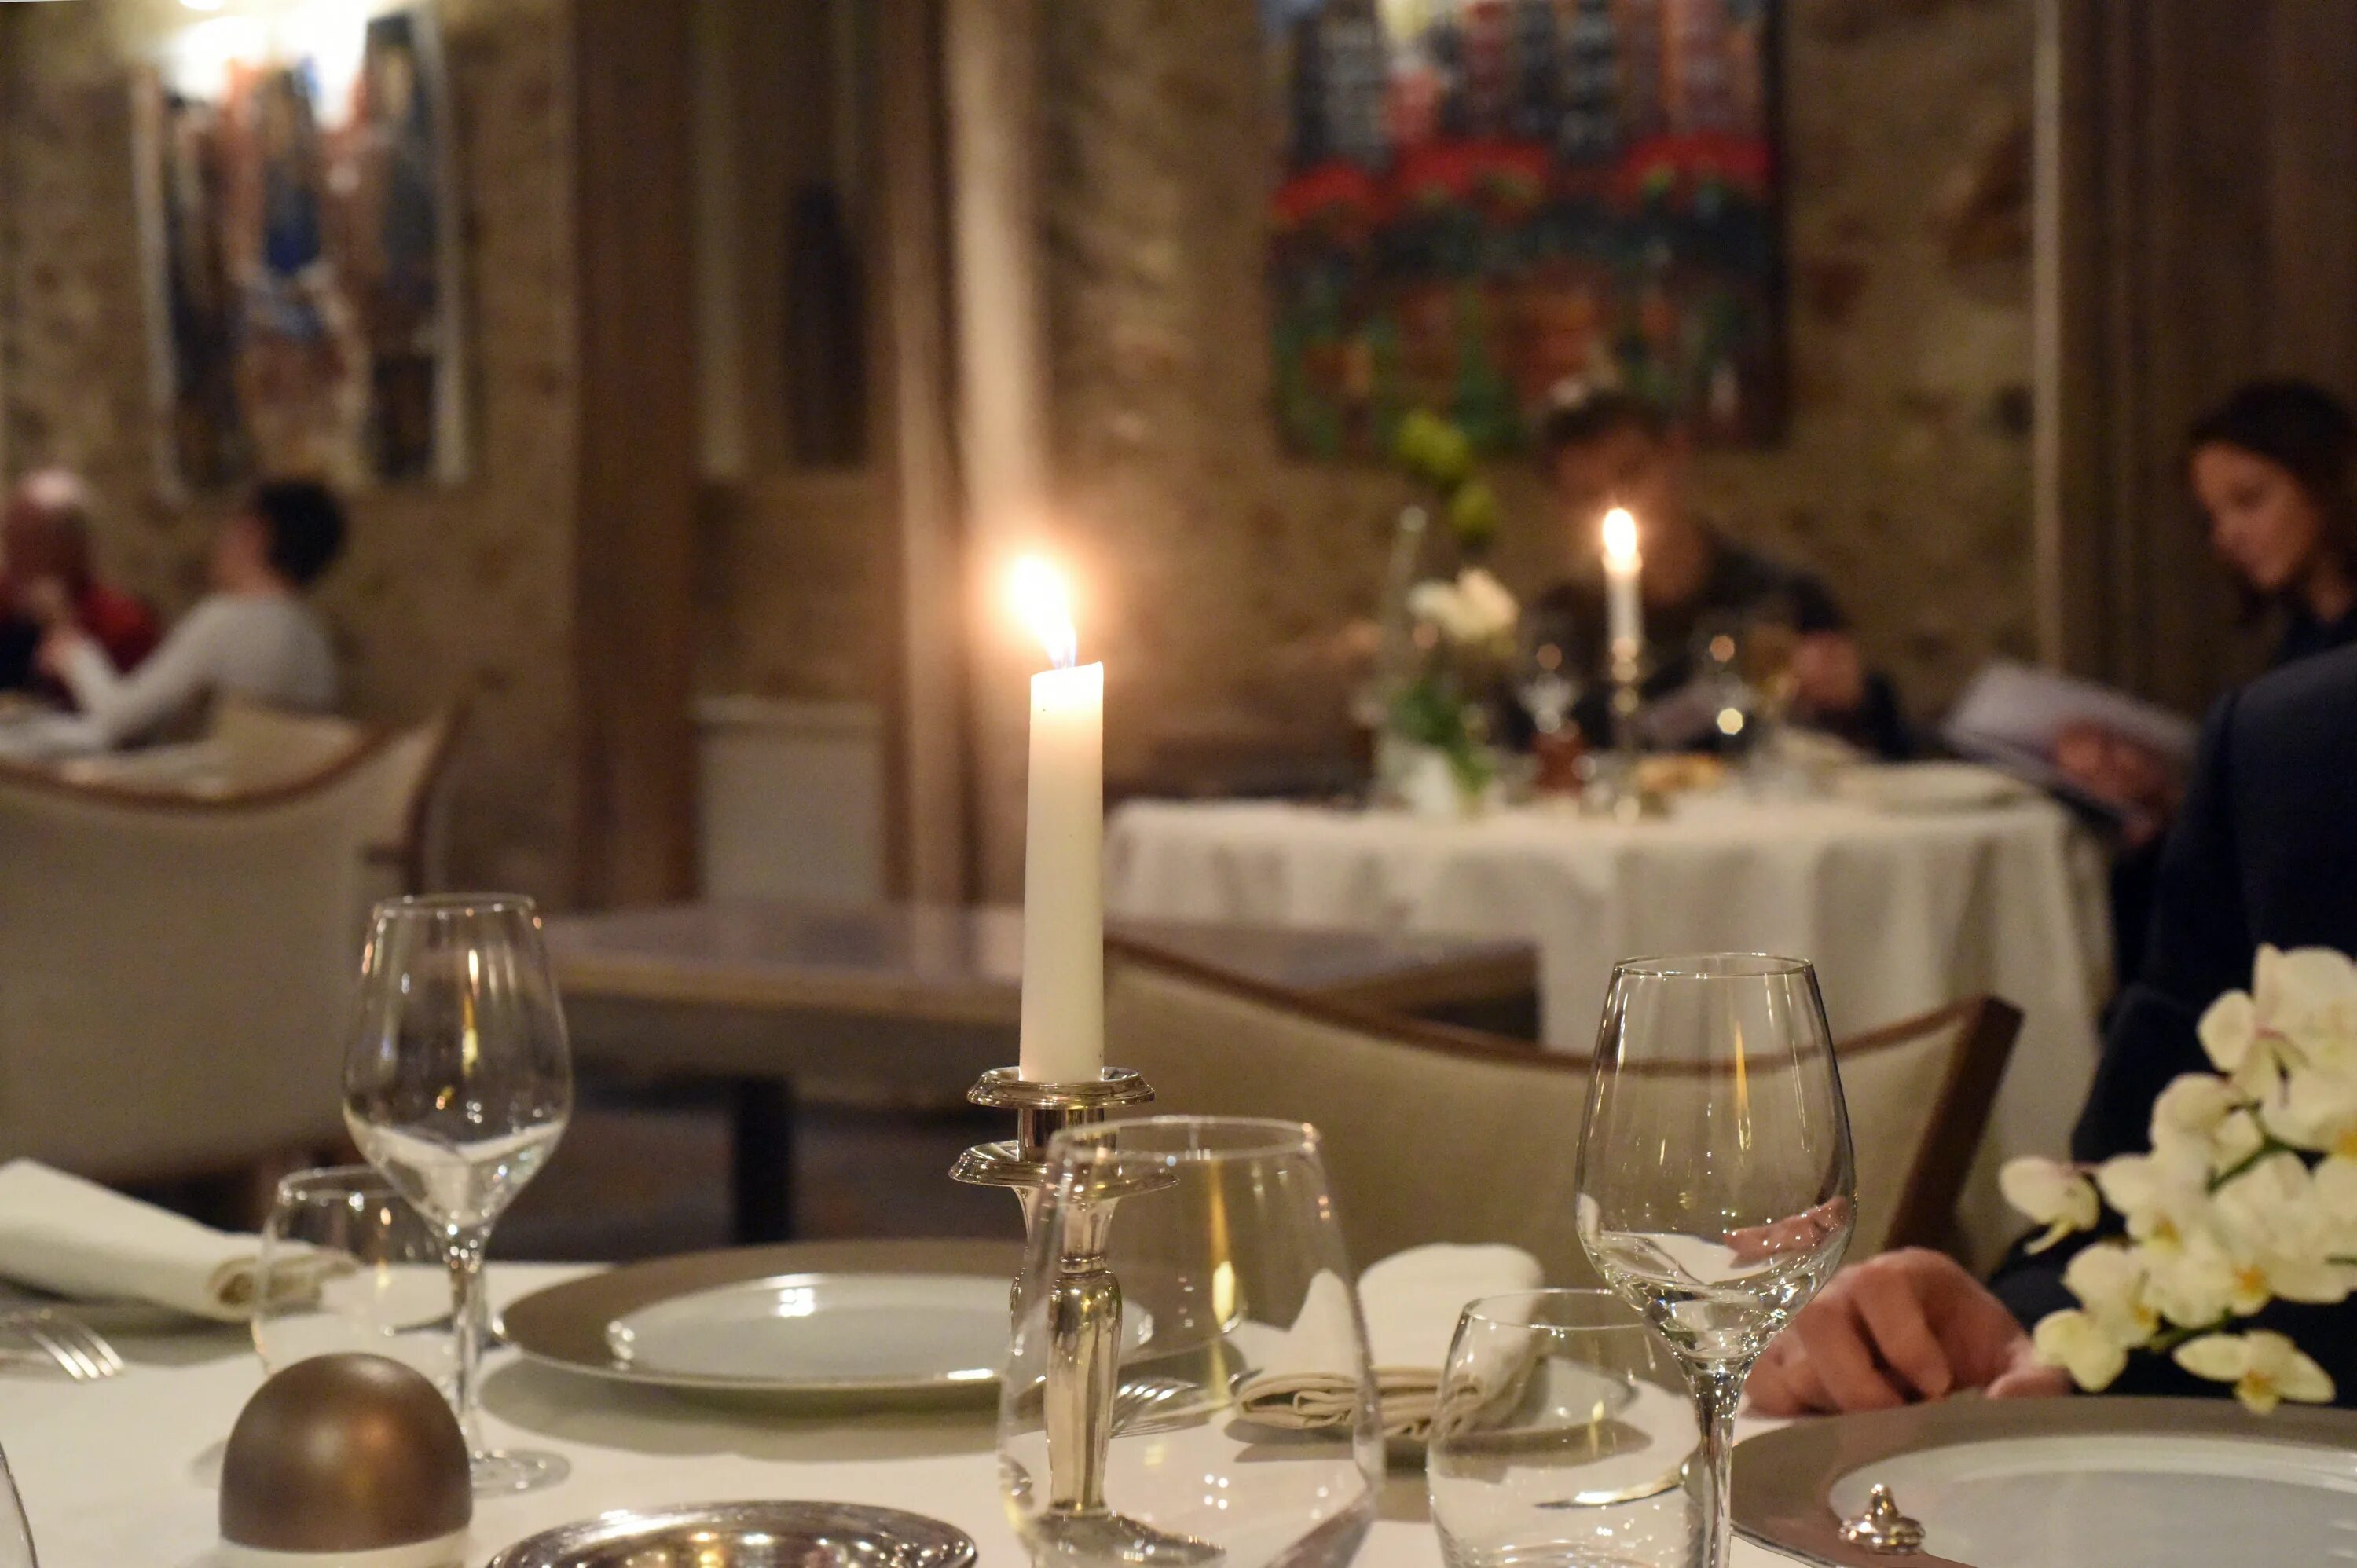 Теле ужин. Столик в ресторане. Сервировка стола в ресторане. Романтический ужин в ресторане. Свечи в ресторане.